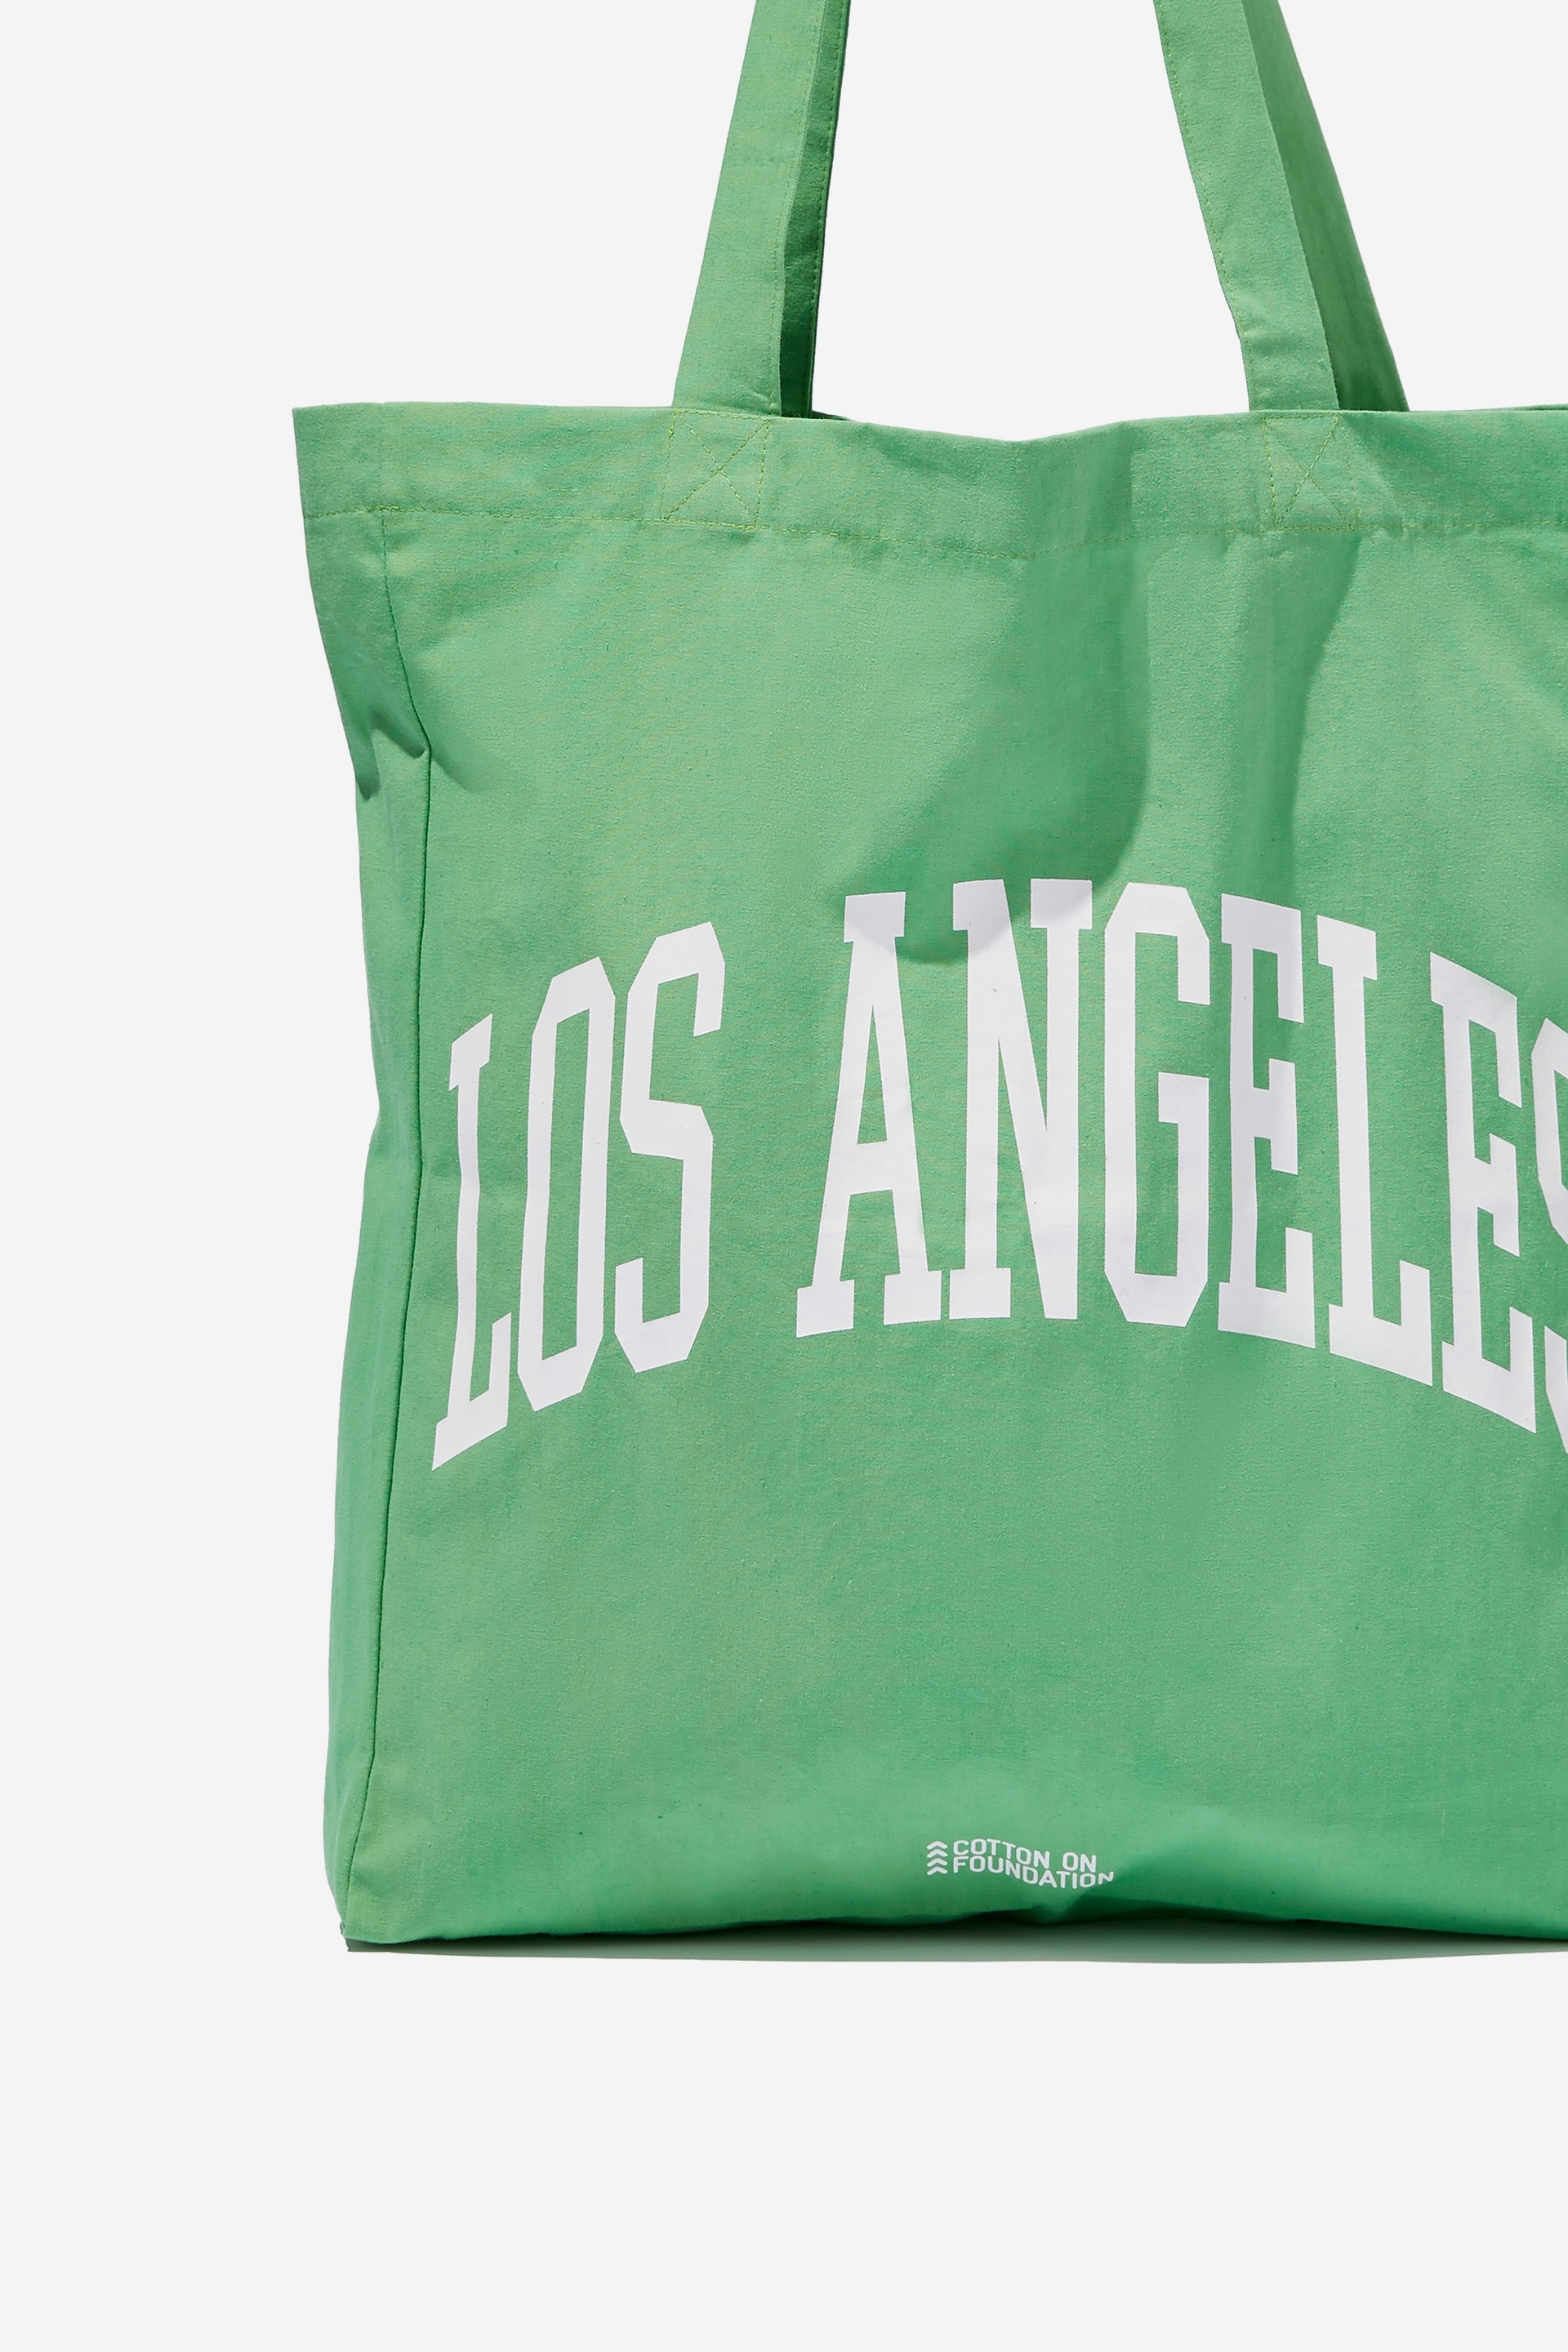 Los Angeles Green Tote Bag